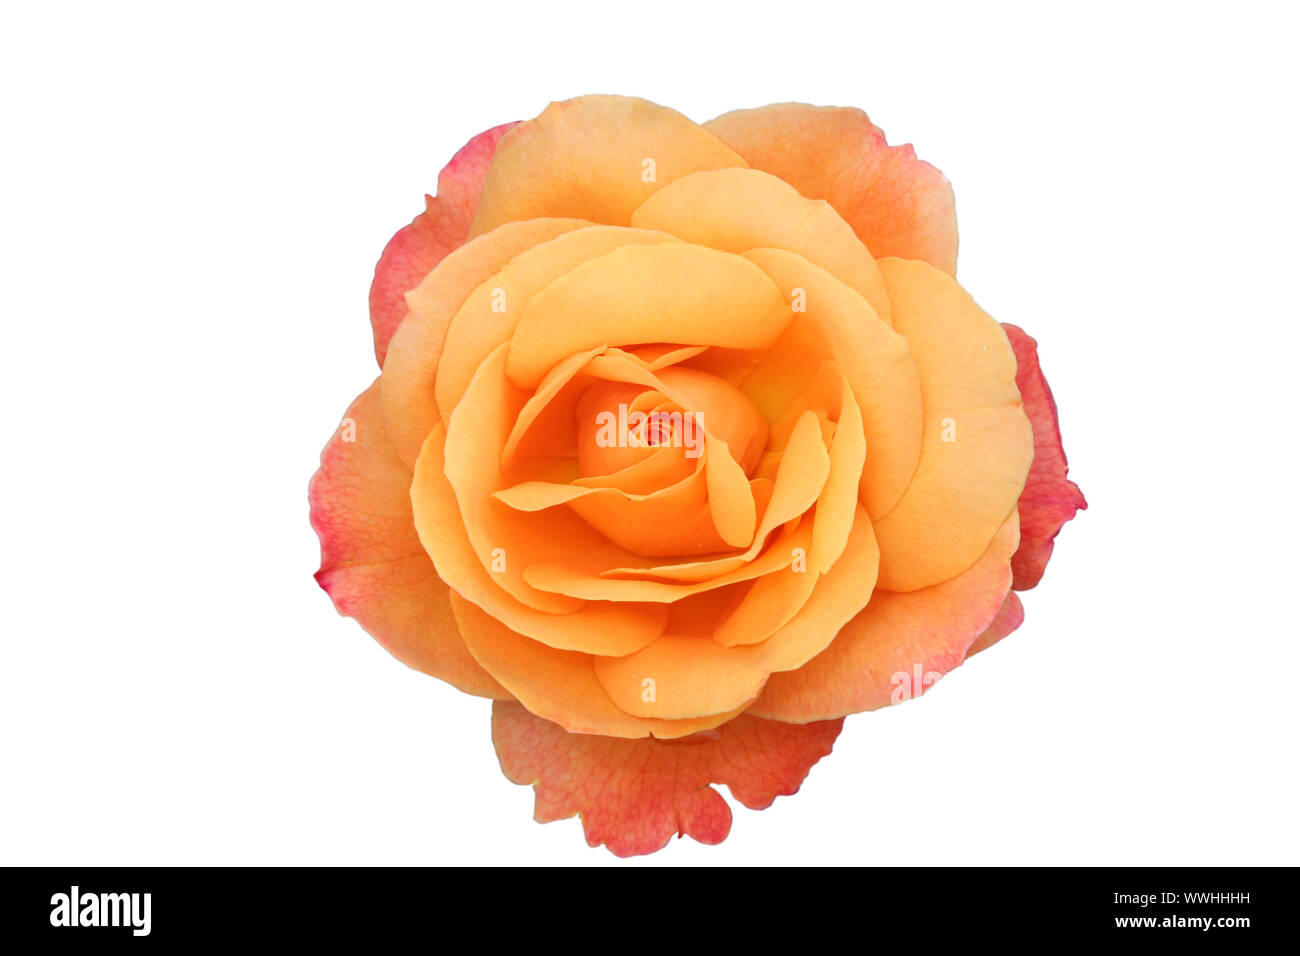 Beautiful isolated orange and pink rose blossom Stock Photo